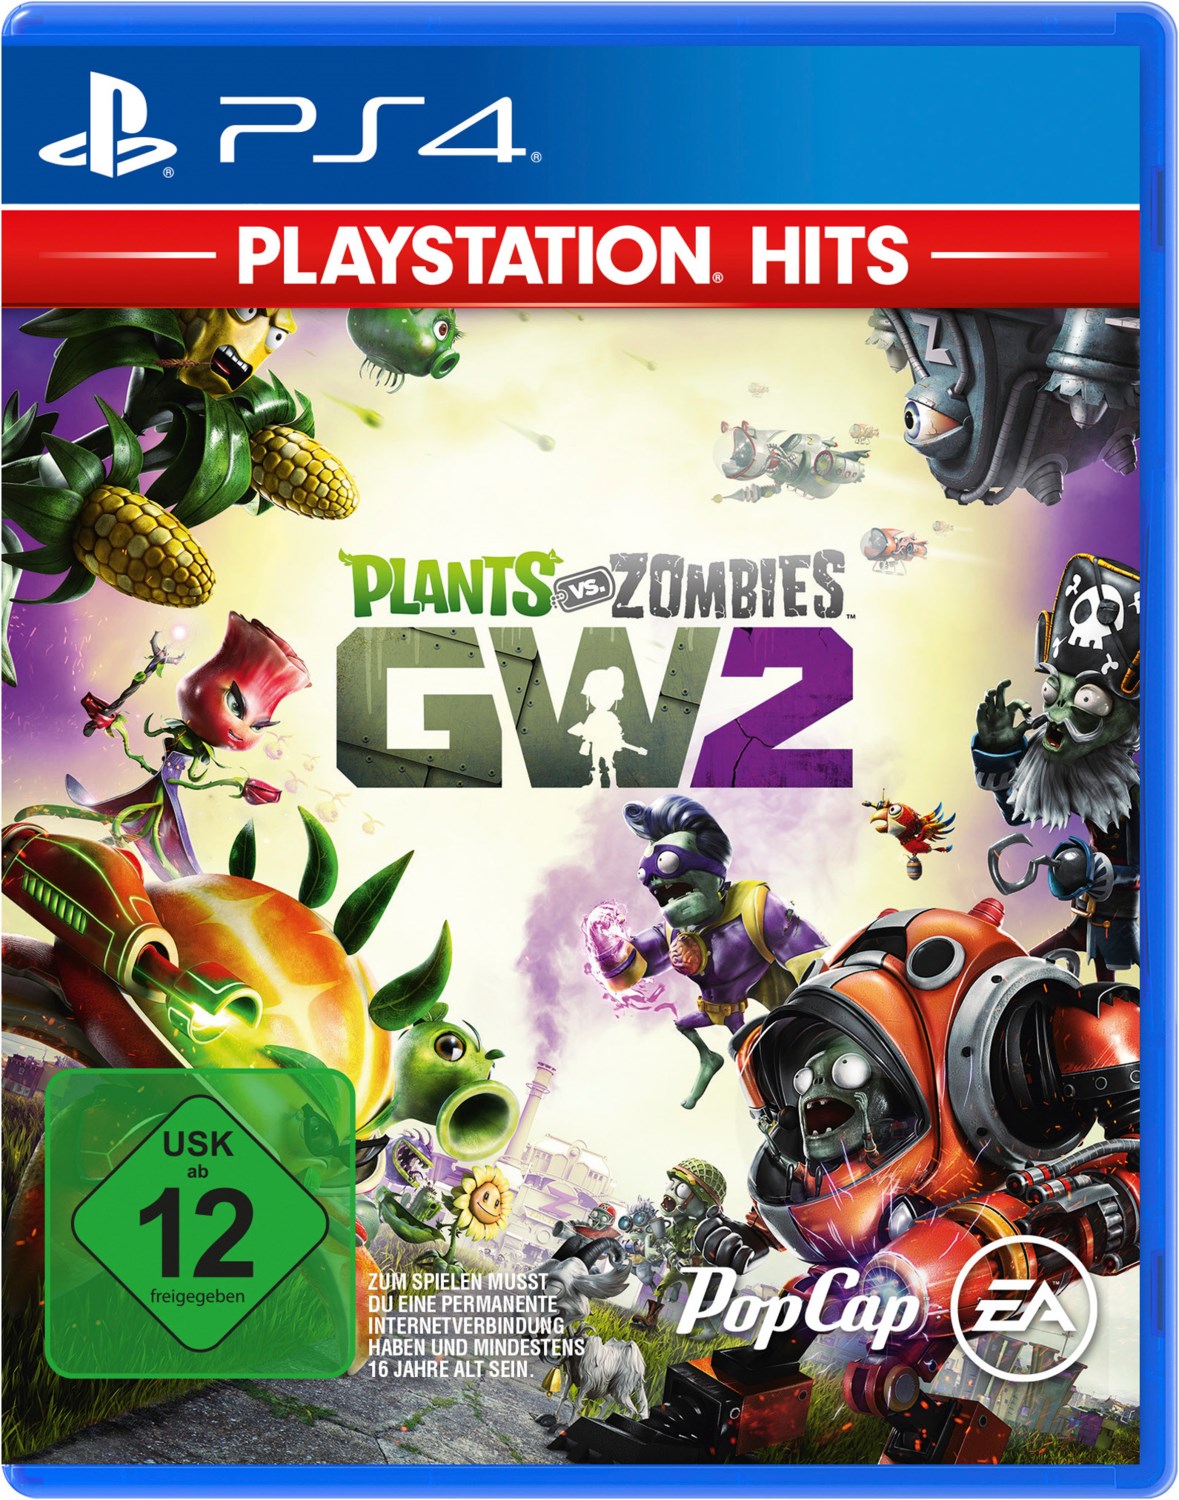 PS4 PS Hits: Plants vs. Zombies Garden Warfare 2